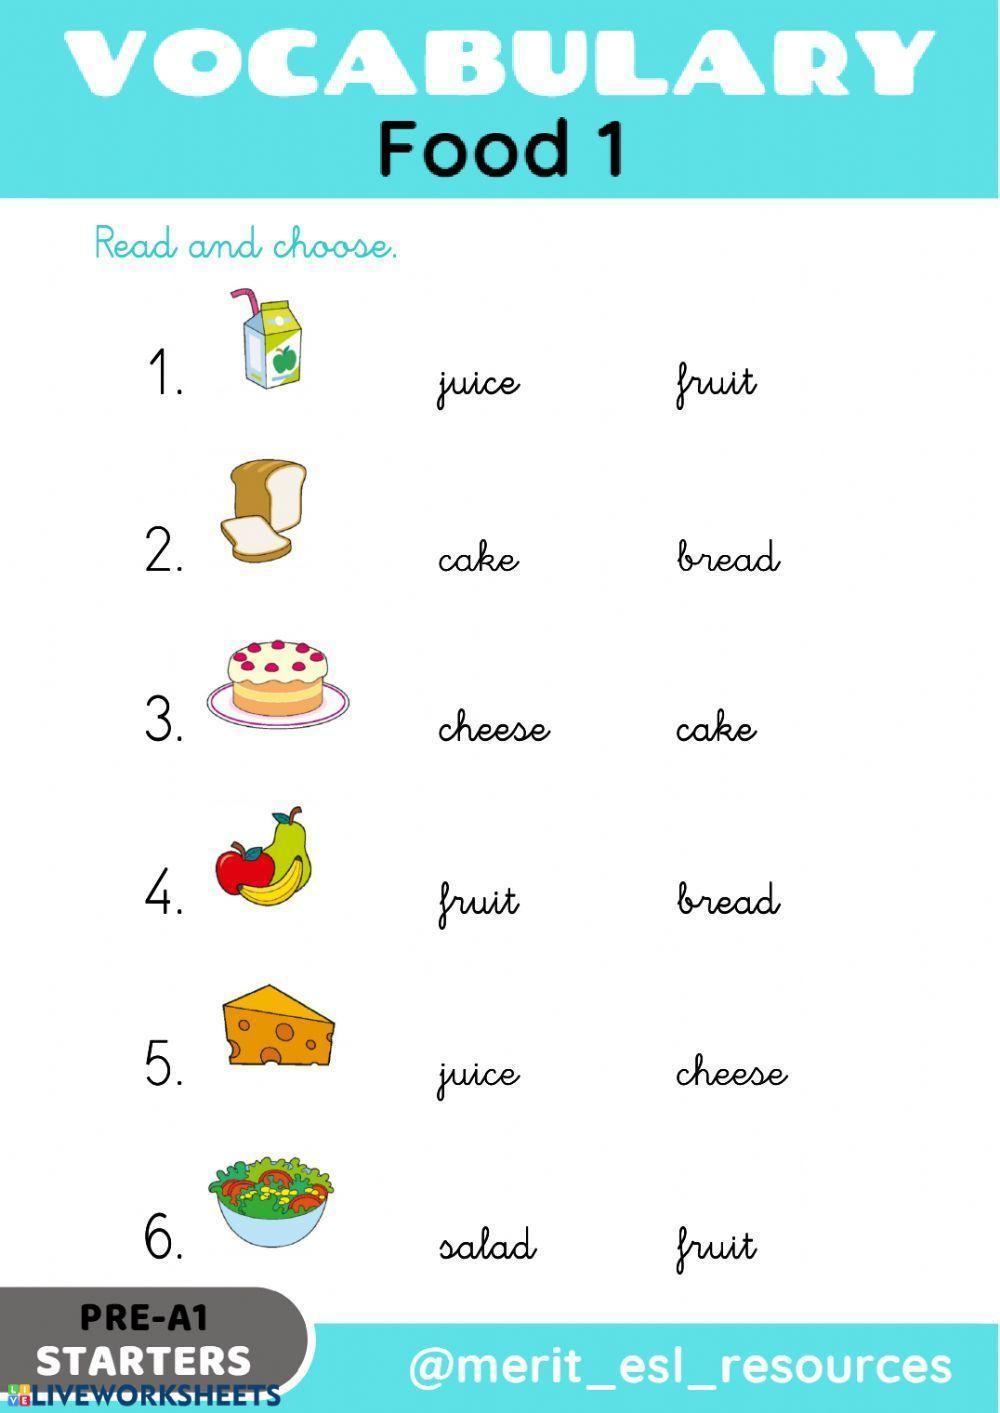 Vocabulary food 1